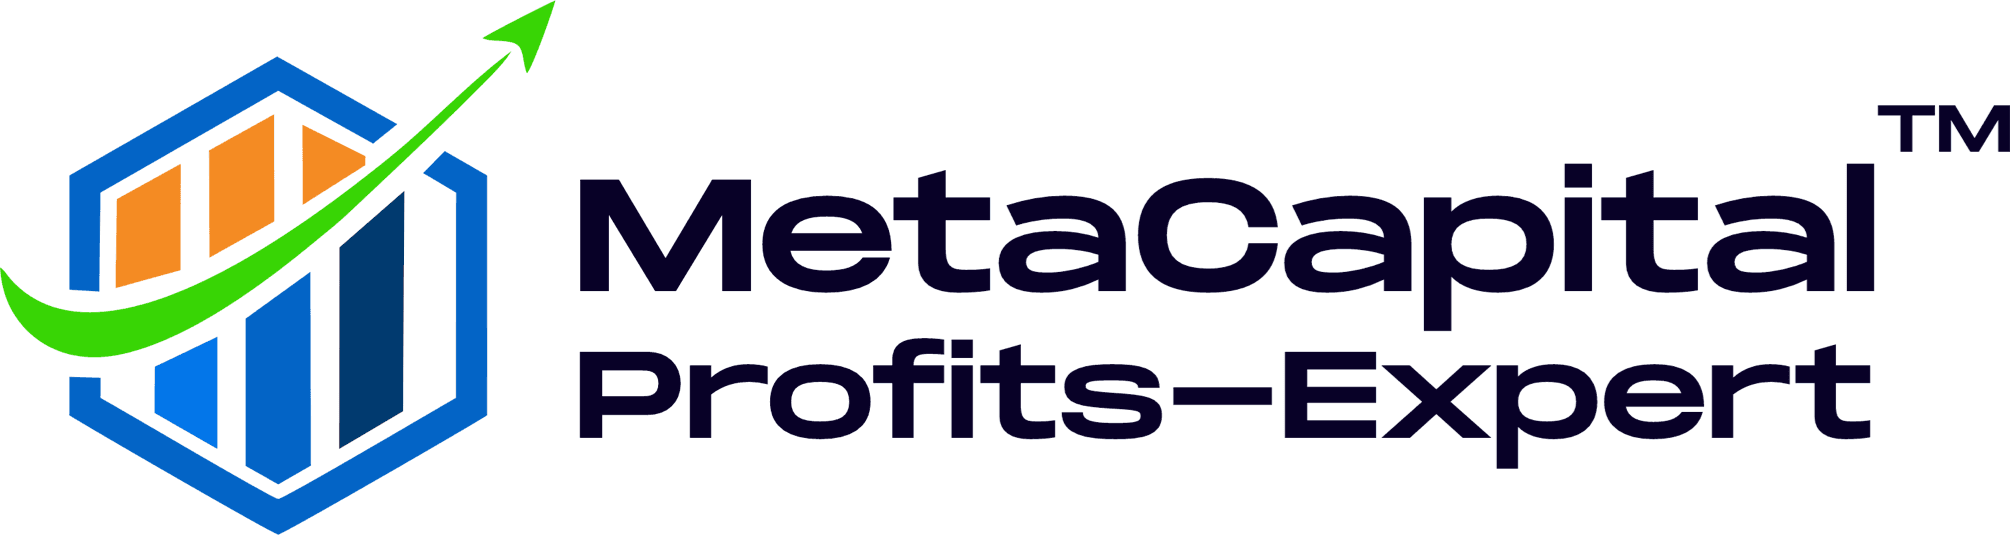 MetaCapital Profits